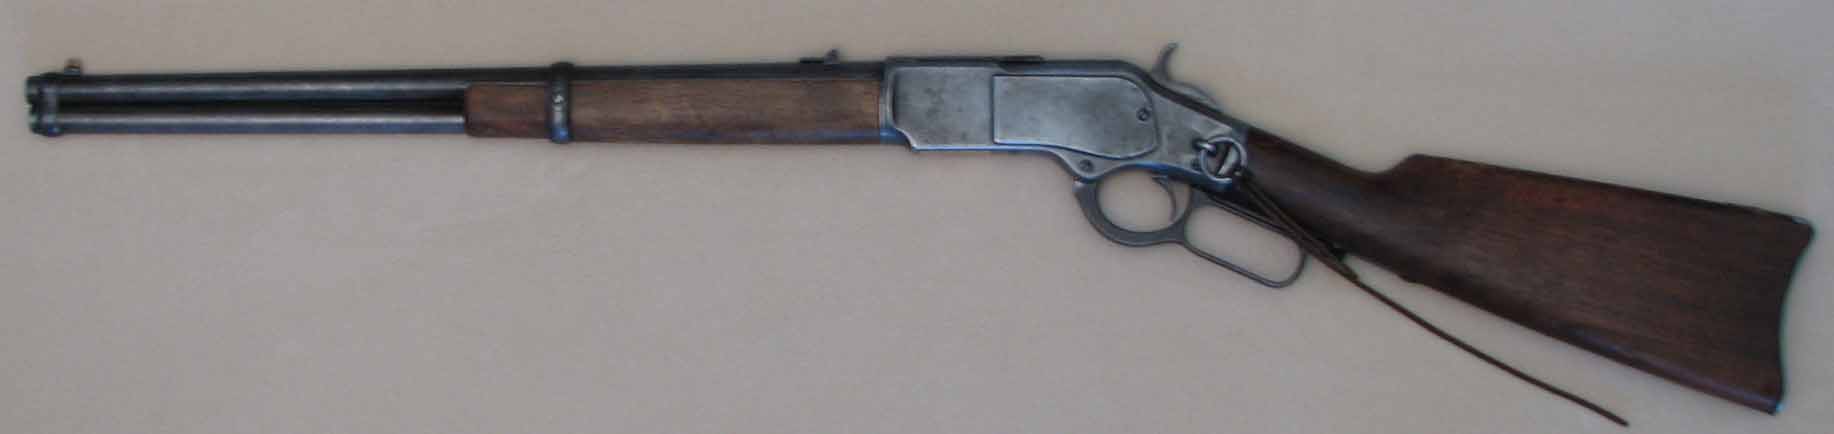 Model 1873 Winchester carbine - Week 9: February 26th thru March 4th